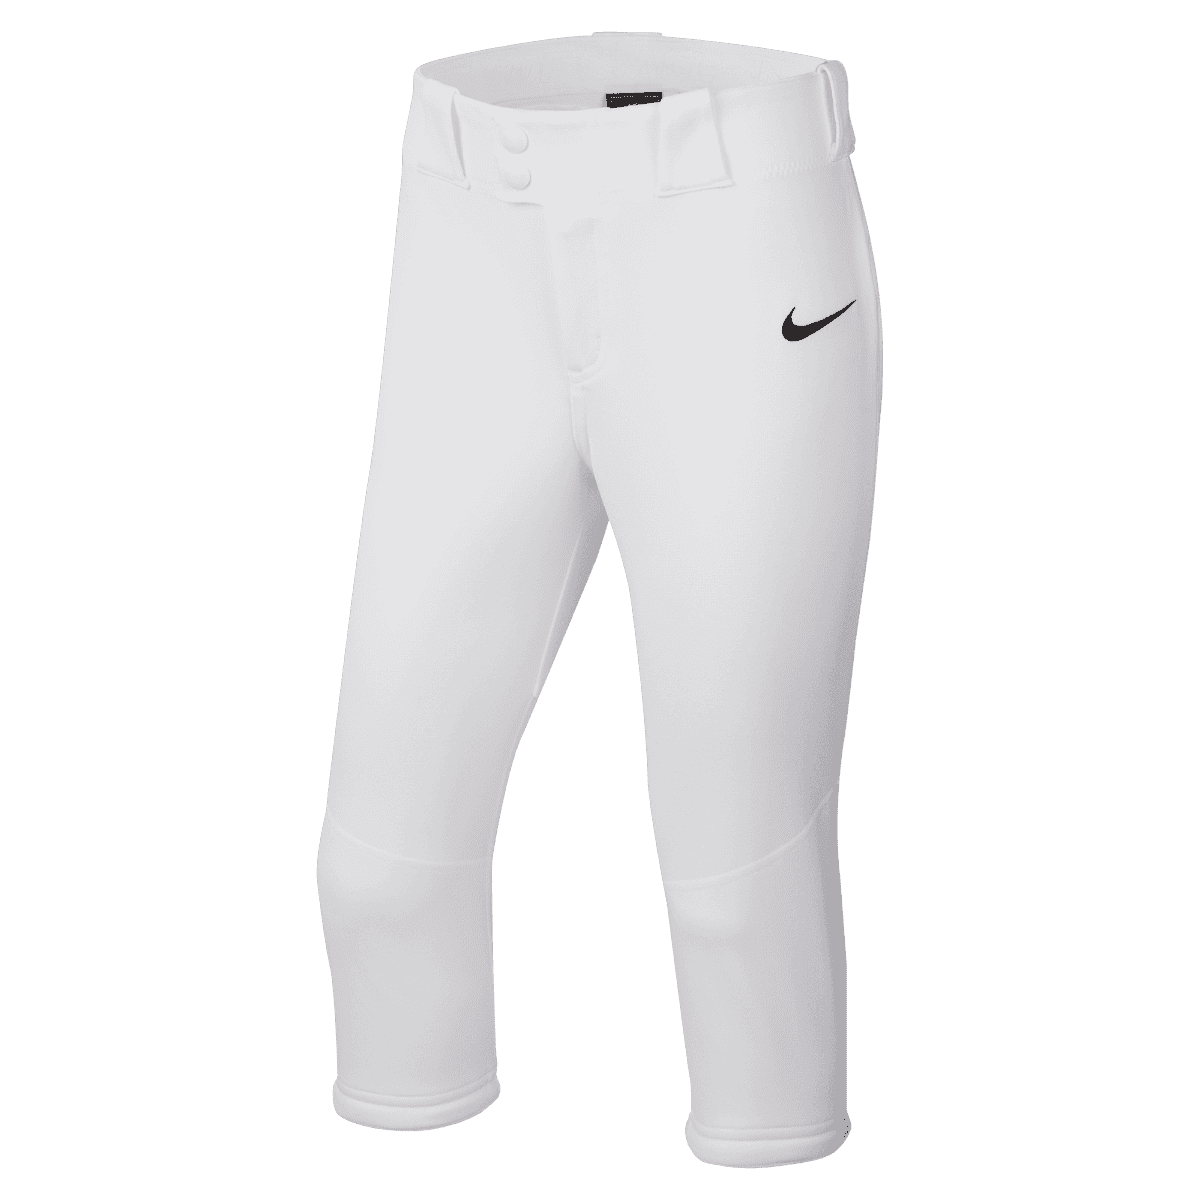 Nike Women's Dri-FIT Vapor Softball Slider White Tights NWT $60 Large